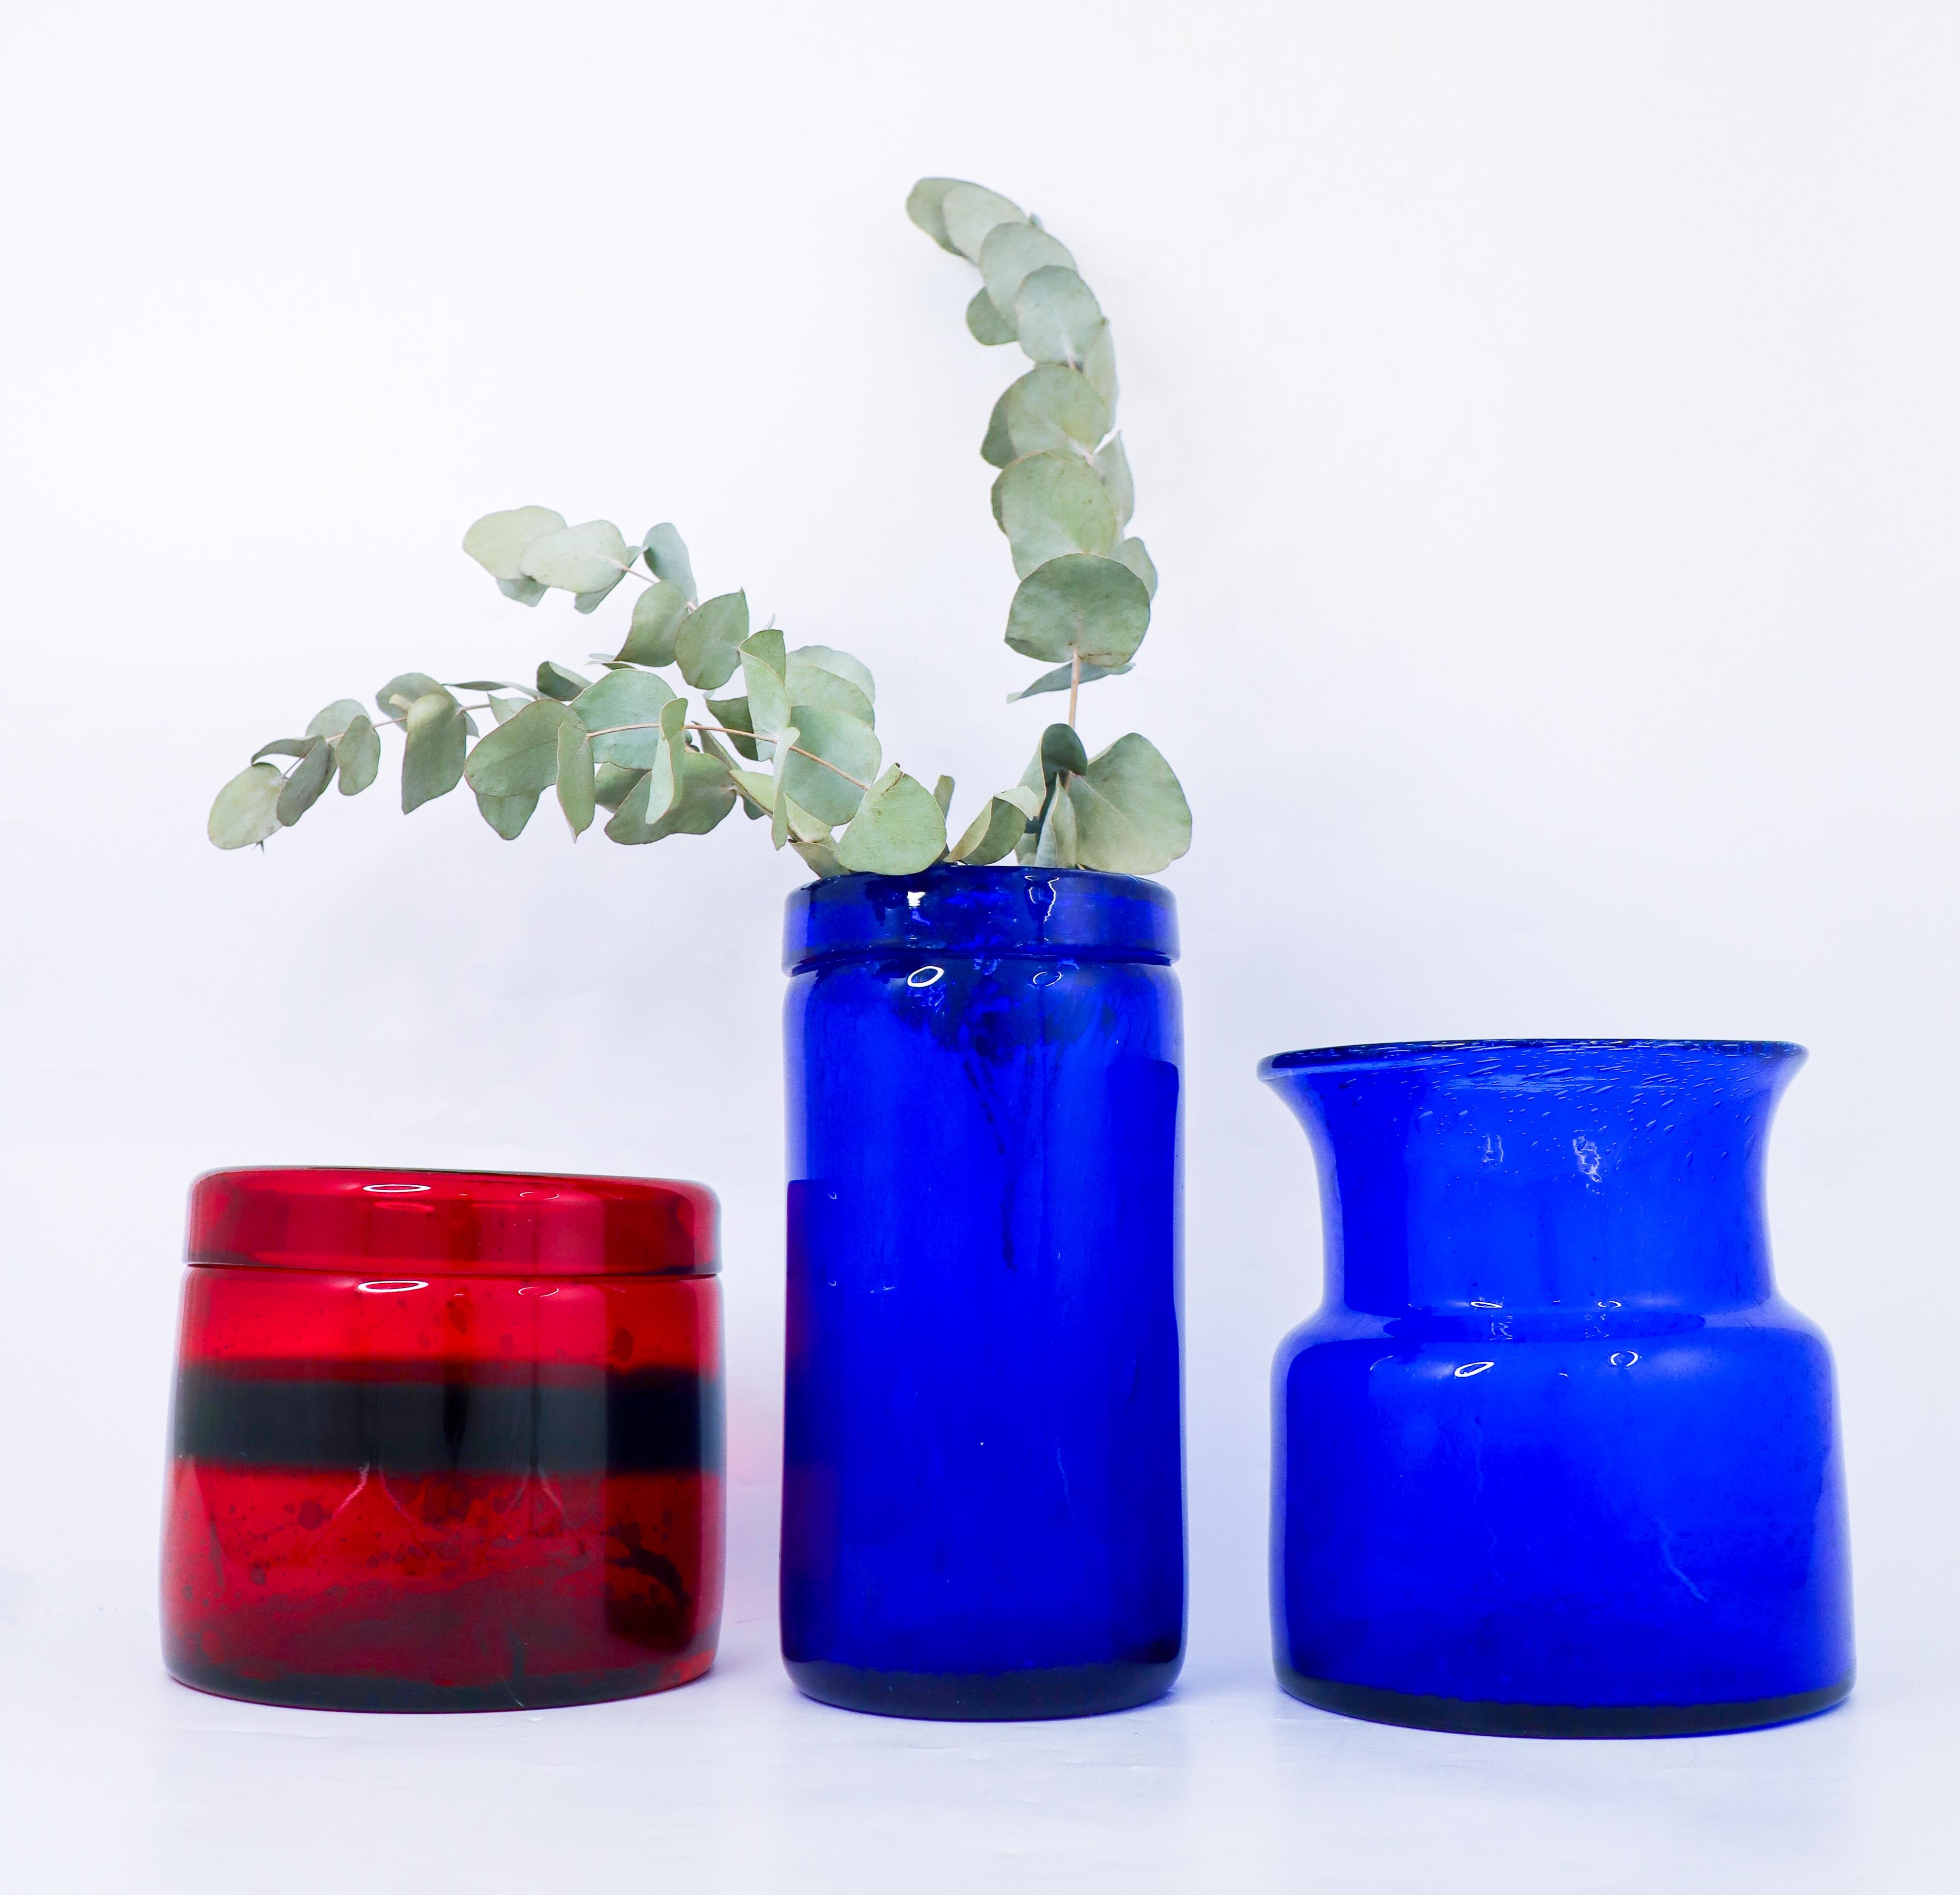 20th Century 3 Red & Blue Glass Vases - Boda Sweden - Erik Höglund - 1960s Midcentury Modern For Sale